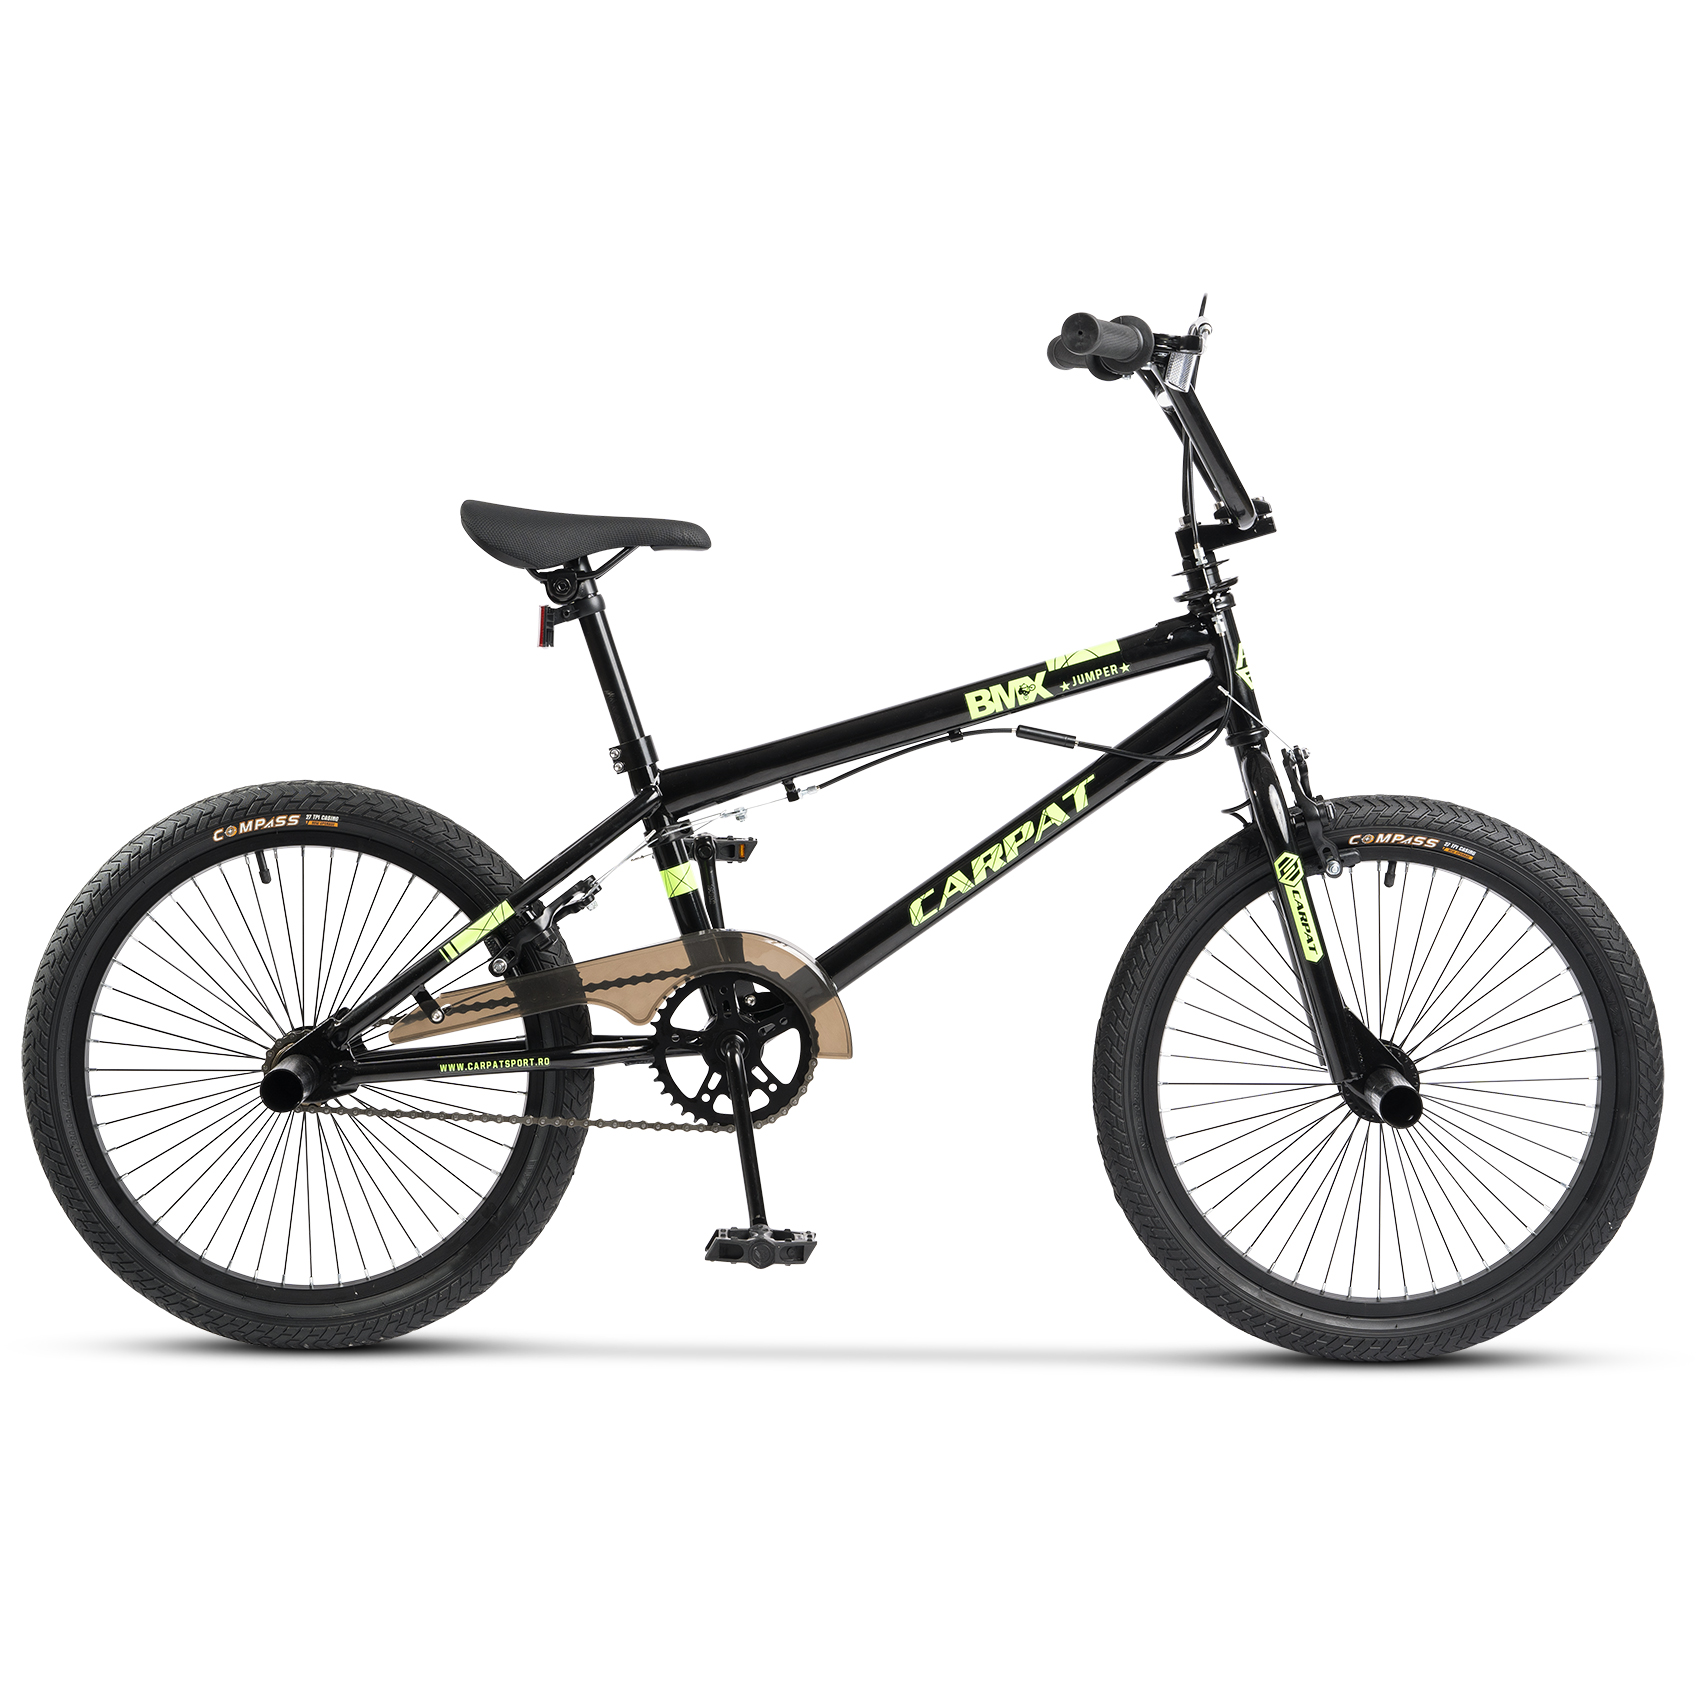 PROMO BICICLETE - Bicicleta BMX Carpat Jumper C2017A 20", Negru/Verde, https:carpatsport.ro